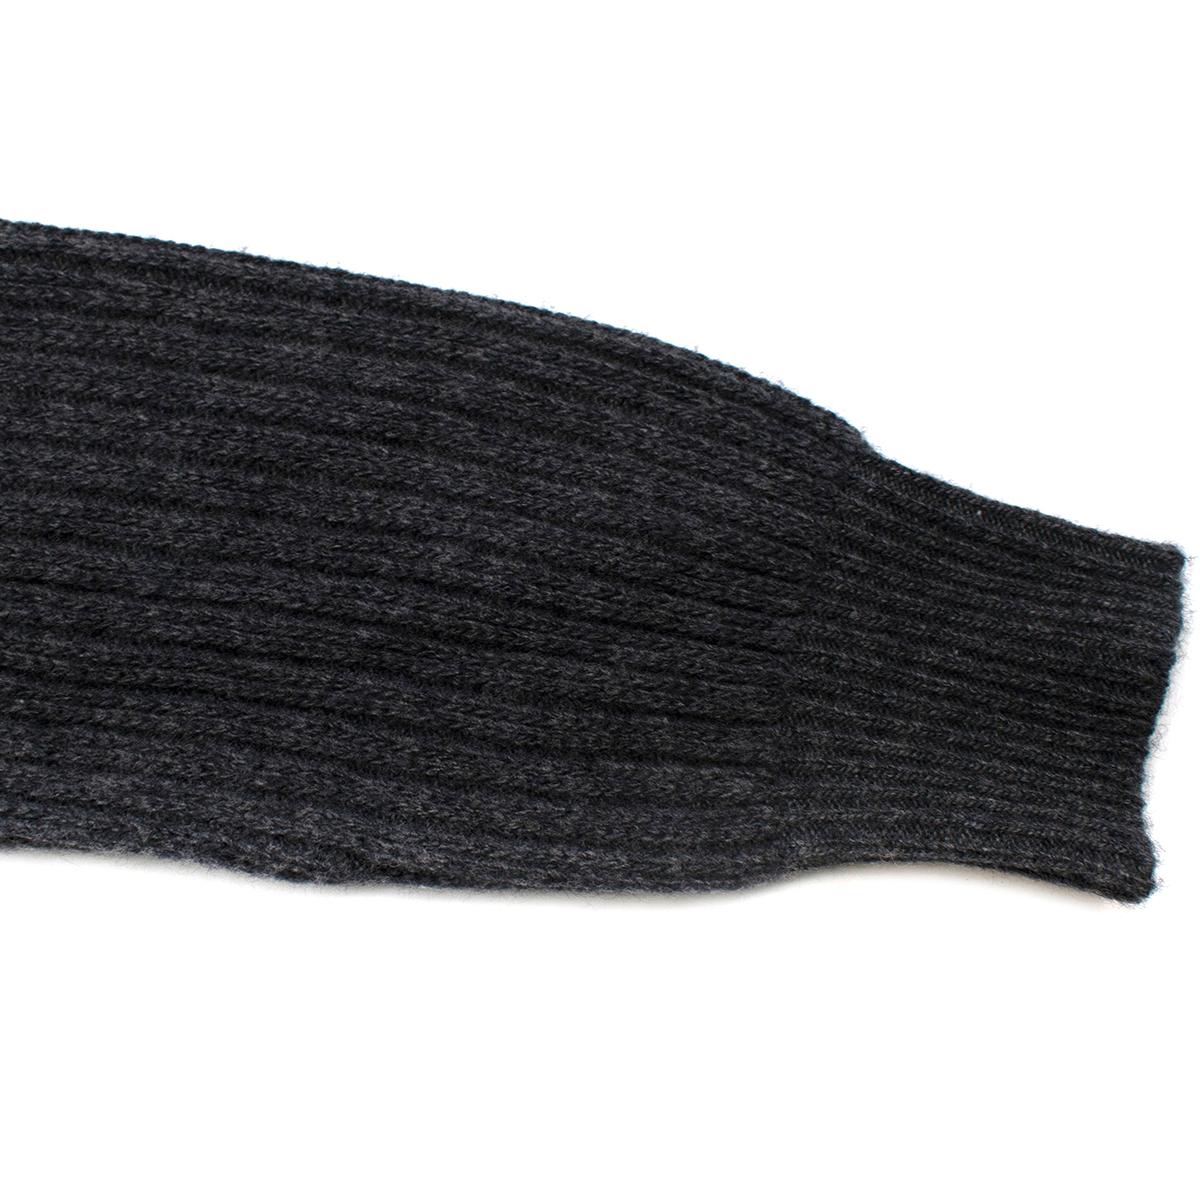 Ermenegildo Zenga Cashmere Blend Grey Sweater - Us size 38 For Sale 3